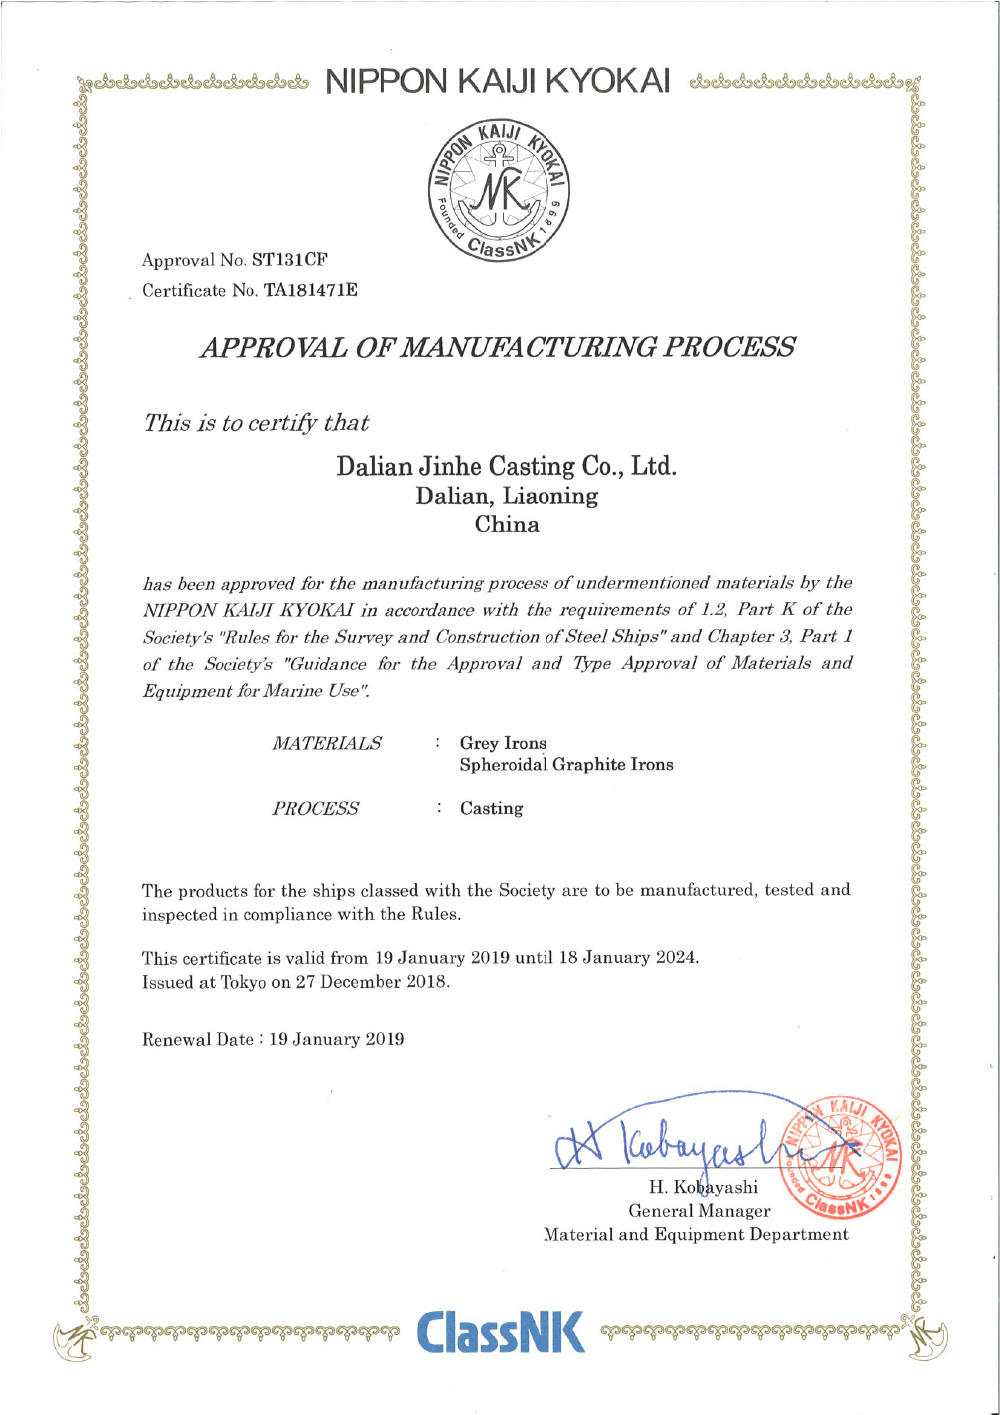 NK new certificate (2019)